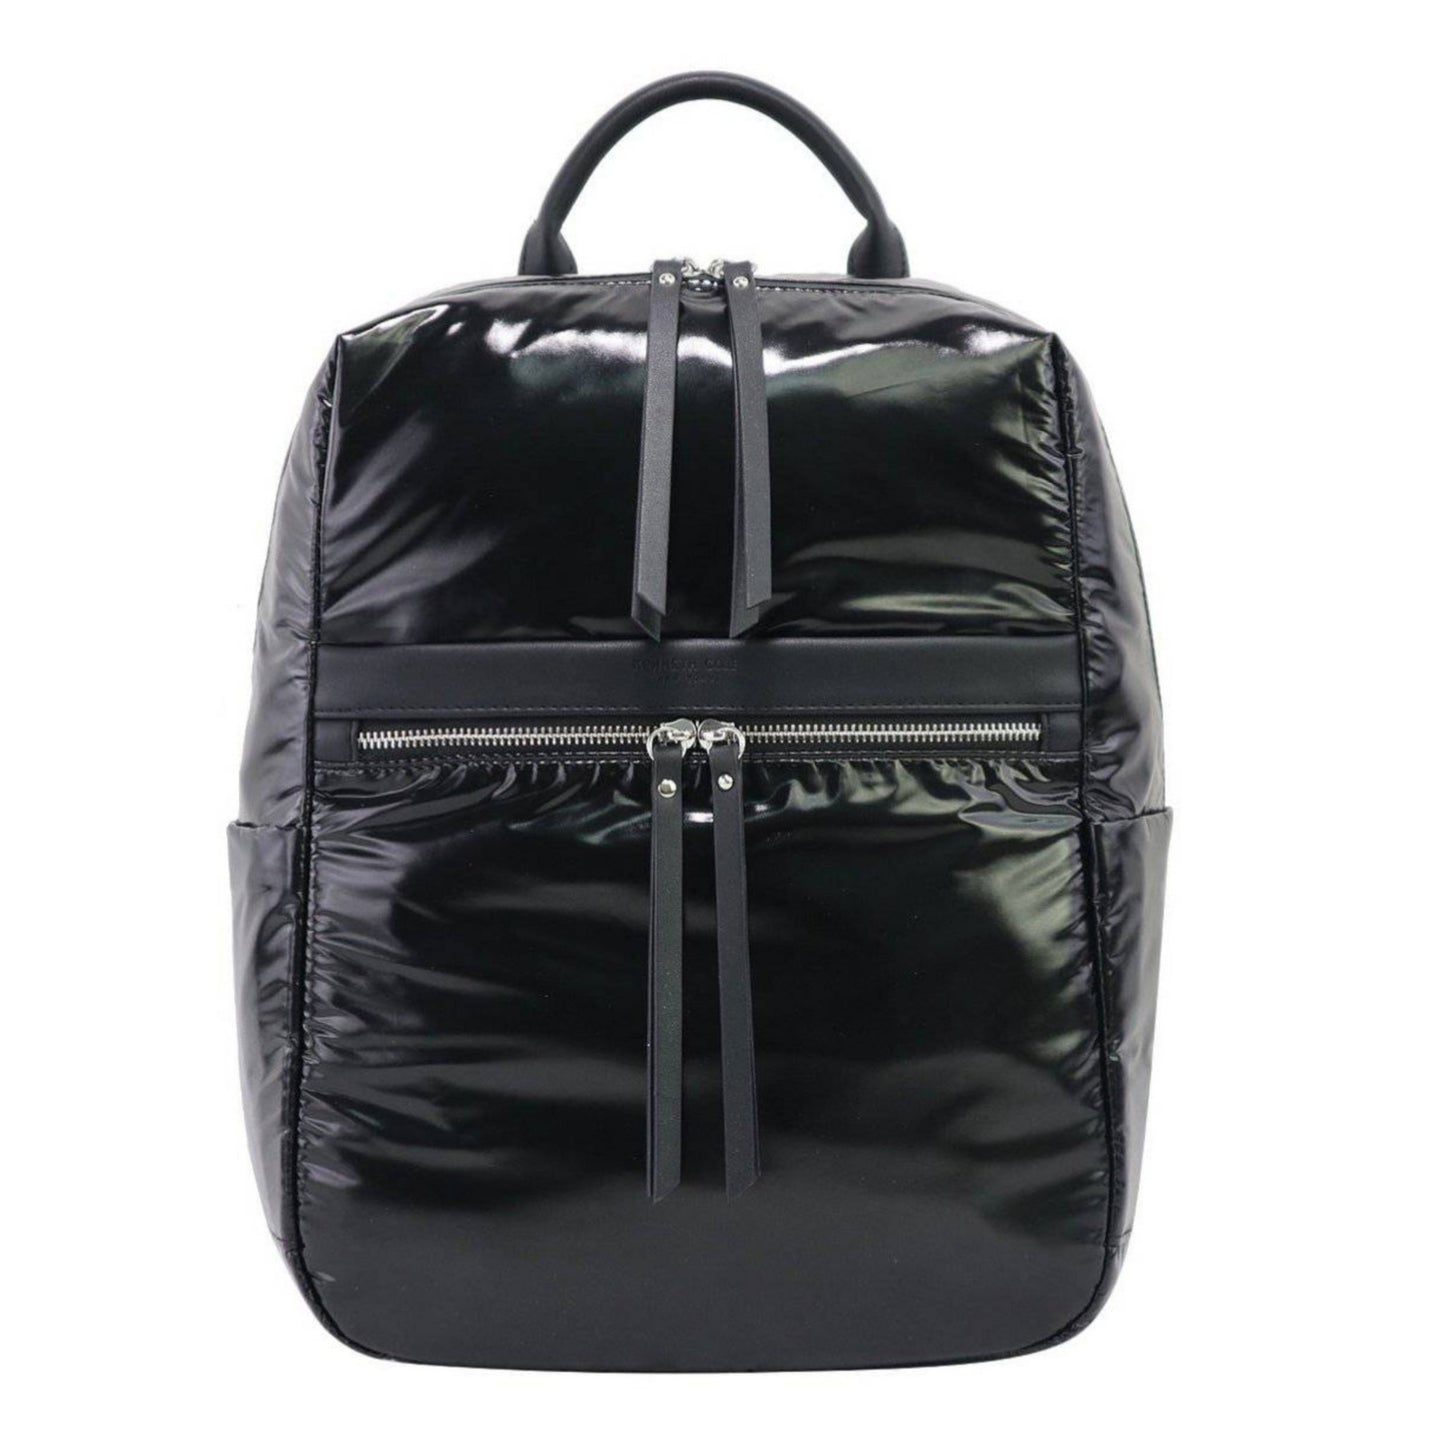 Kenneth Cole New York Hanover Backpack (Black/Silver)